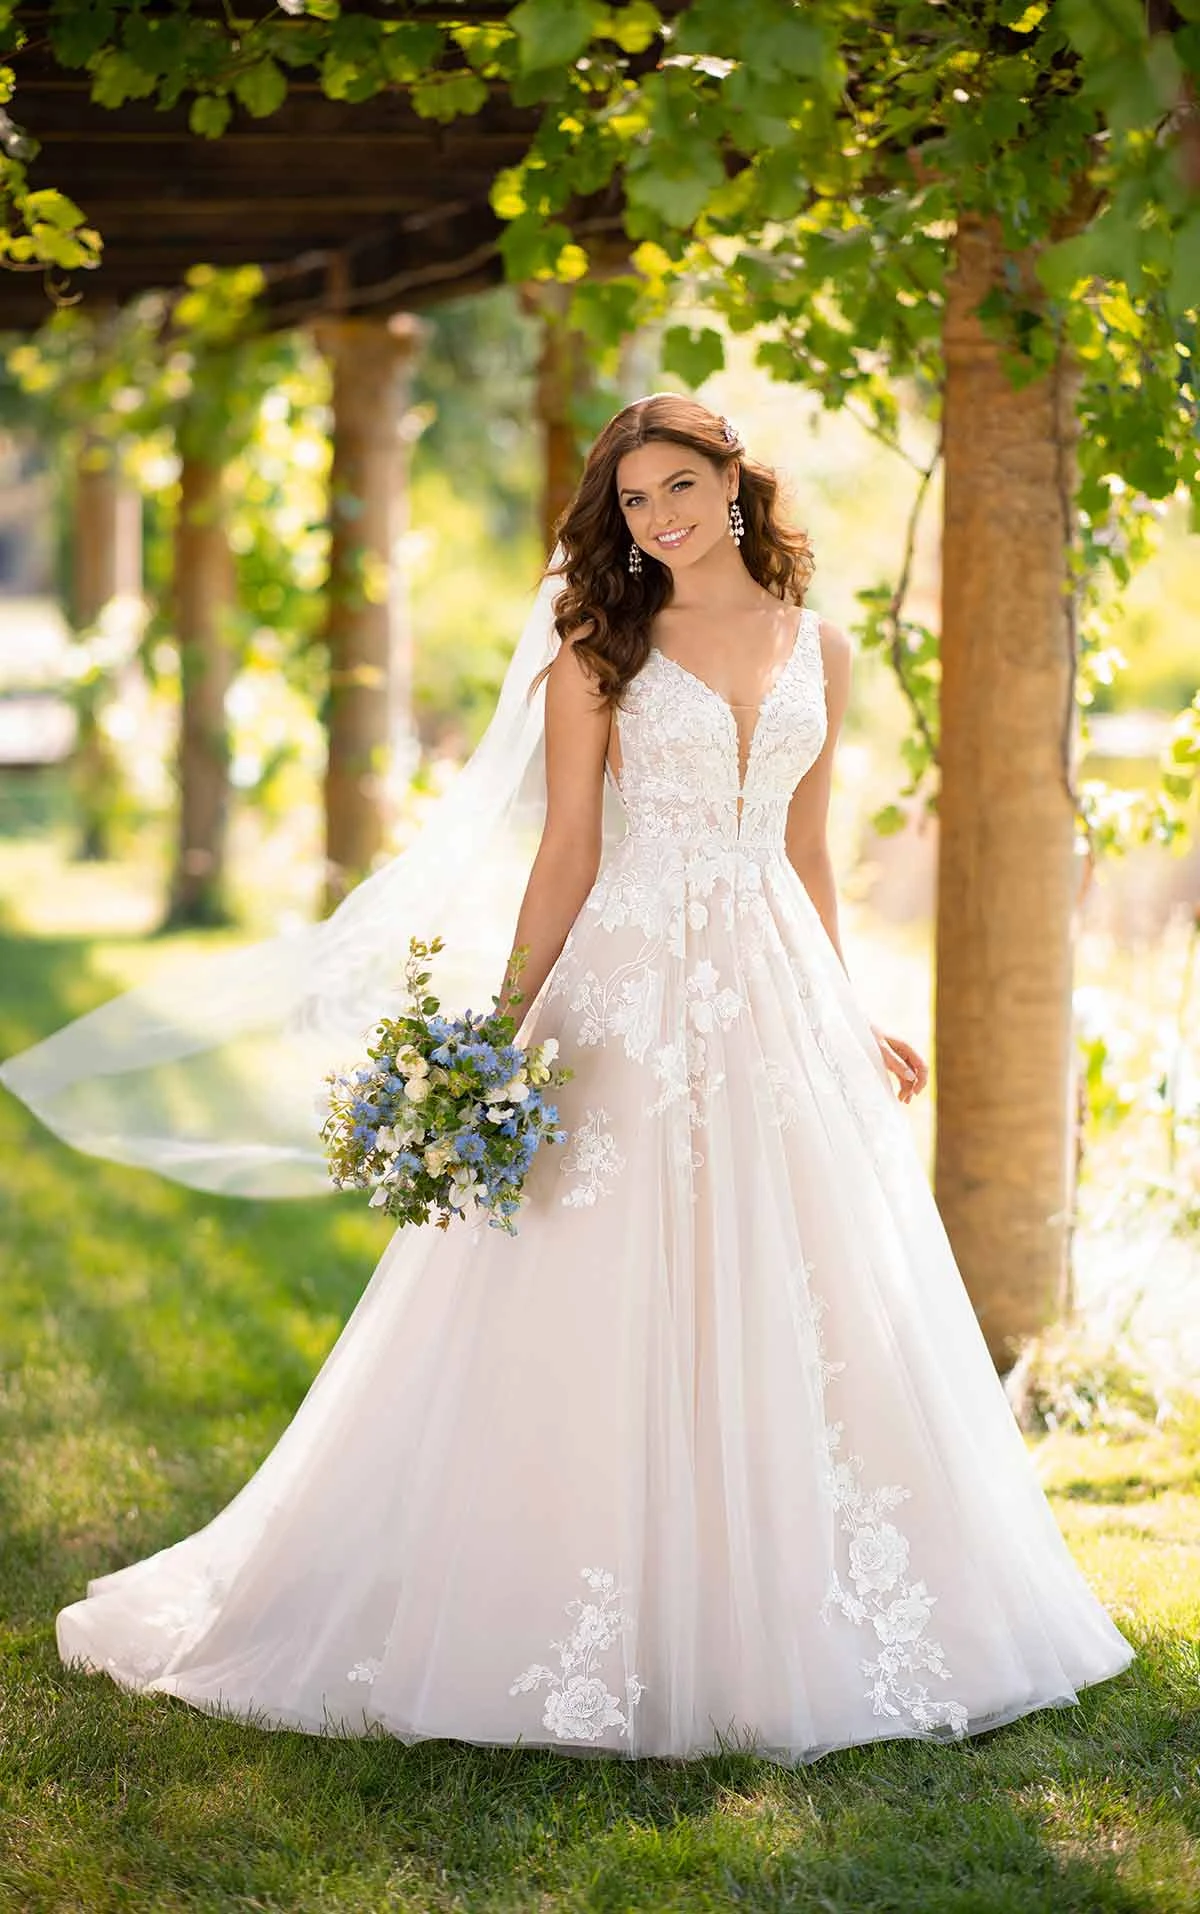 Full ALine Wedding Dress with Floral Details Essense of